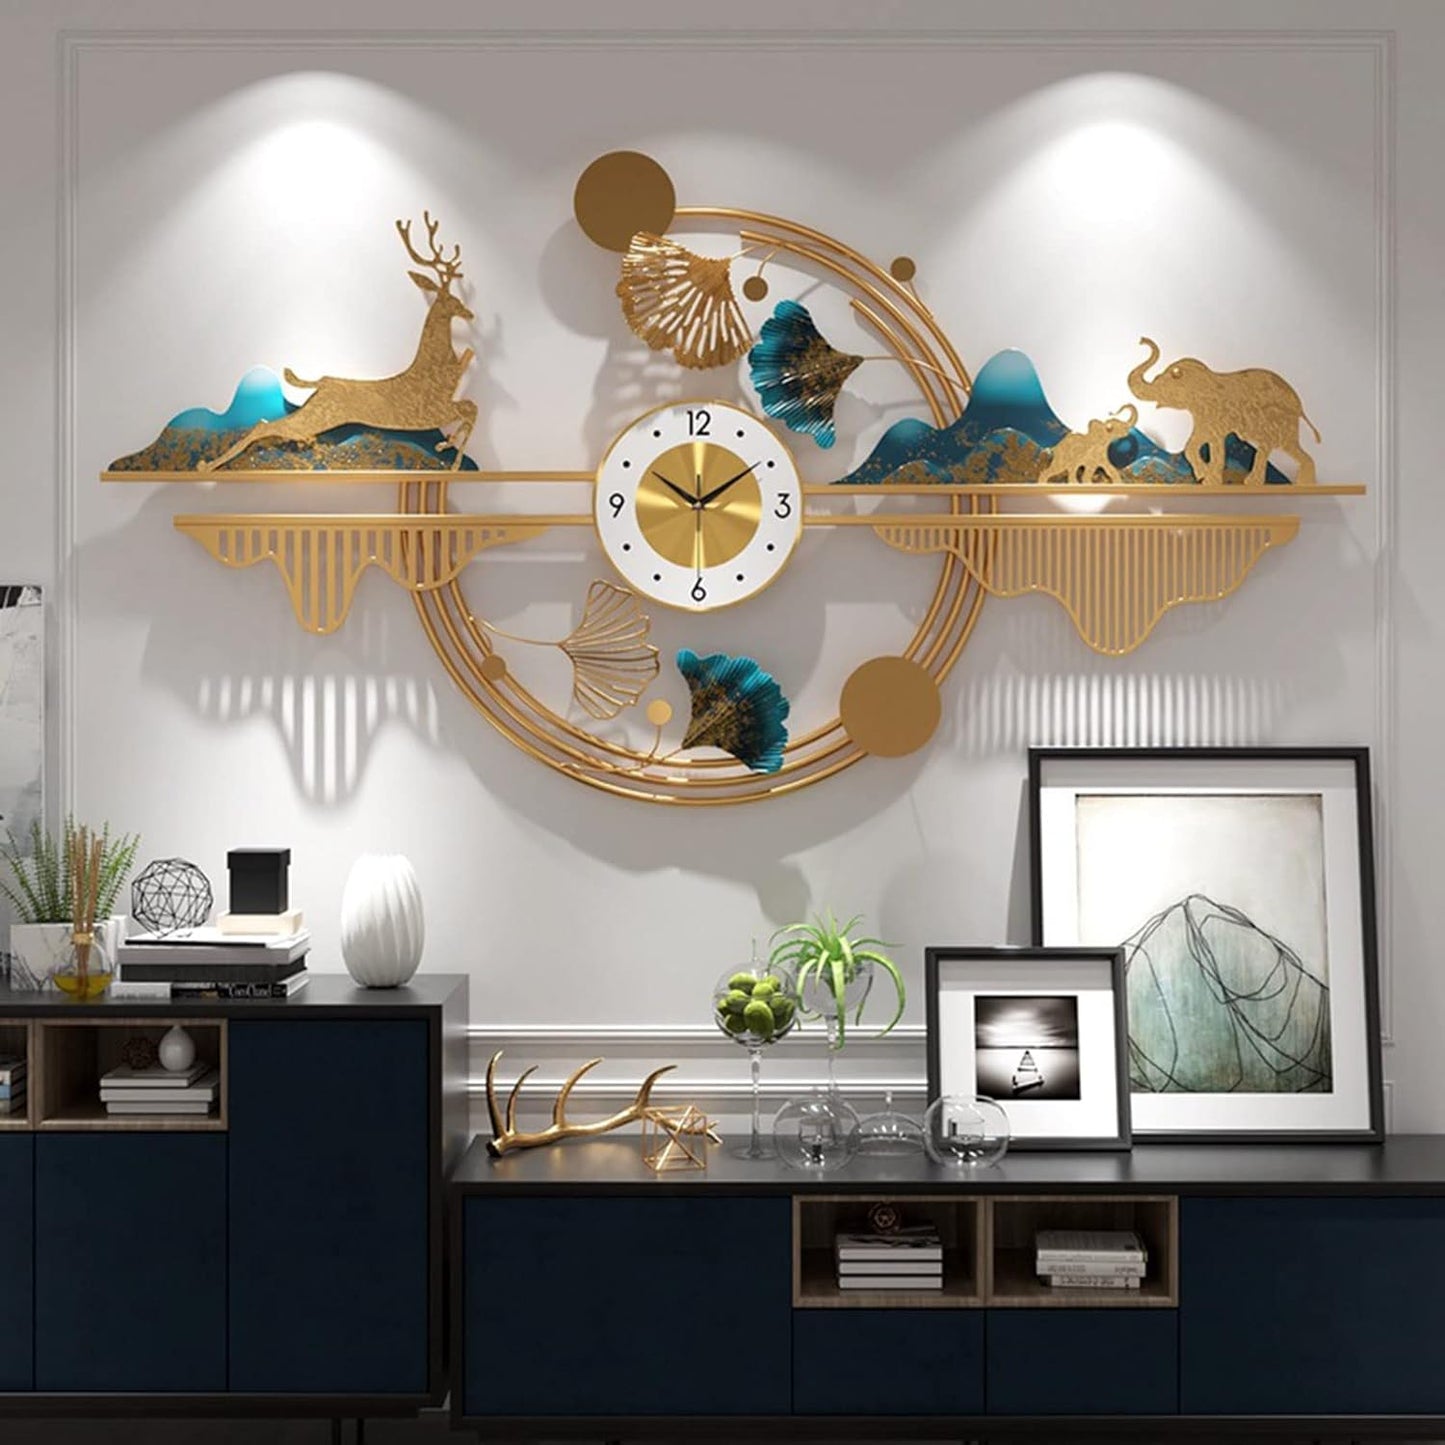 Starfisher Metal Wall Art Works - Ginkgo biloba 3D Wall Metal Wall - Home decor